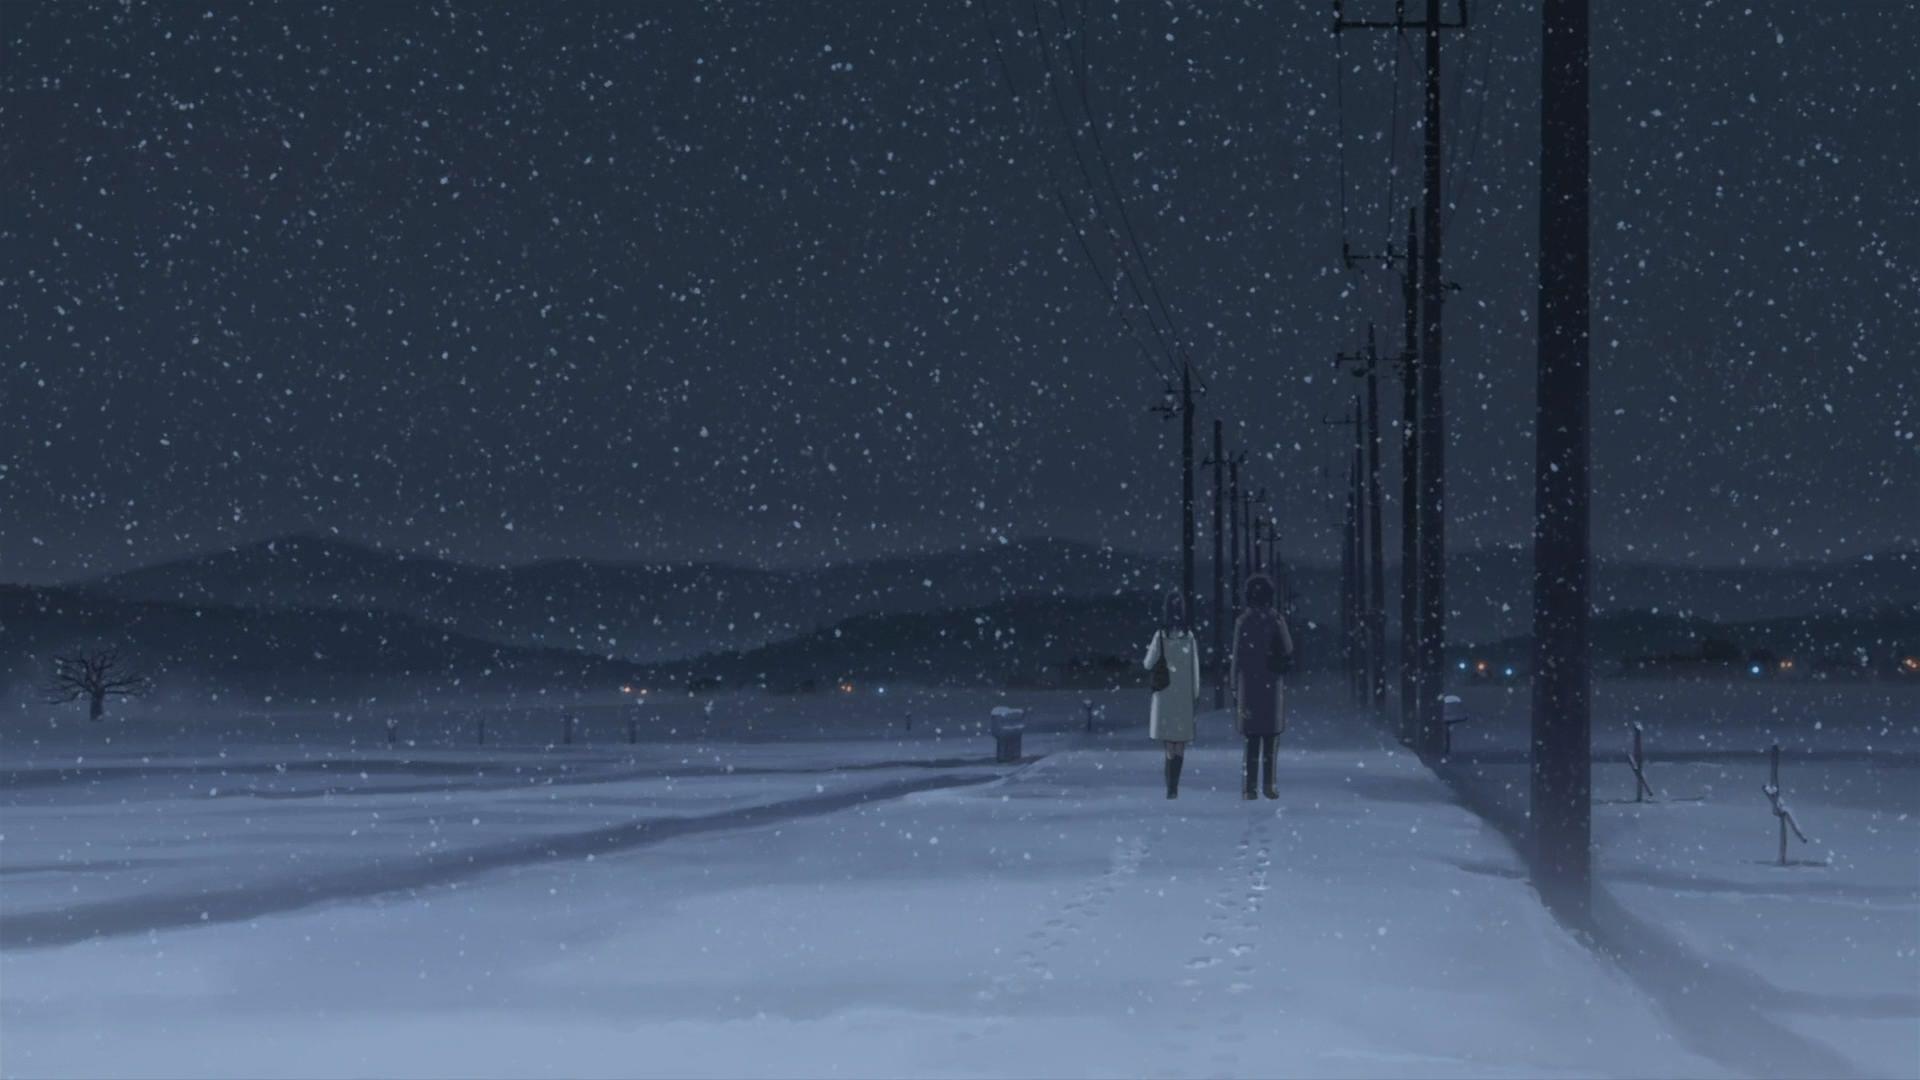 Anime Winter Scenery Wallpaper 8. Anime Winter Scenery Wallpaper